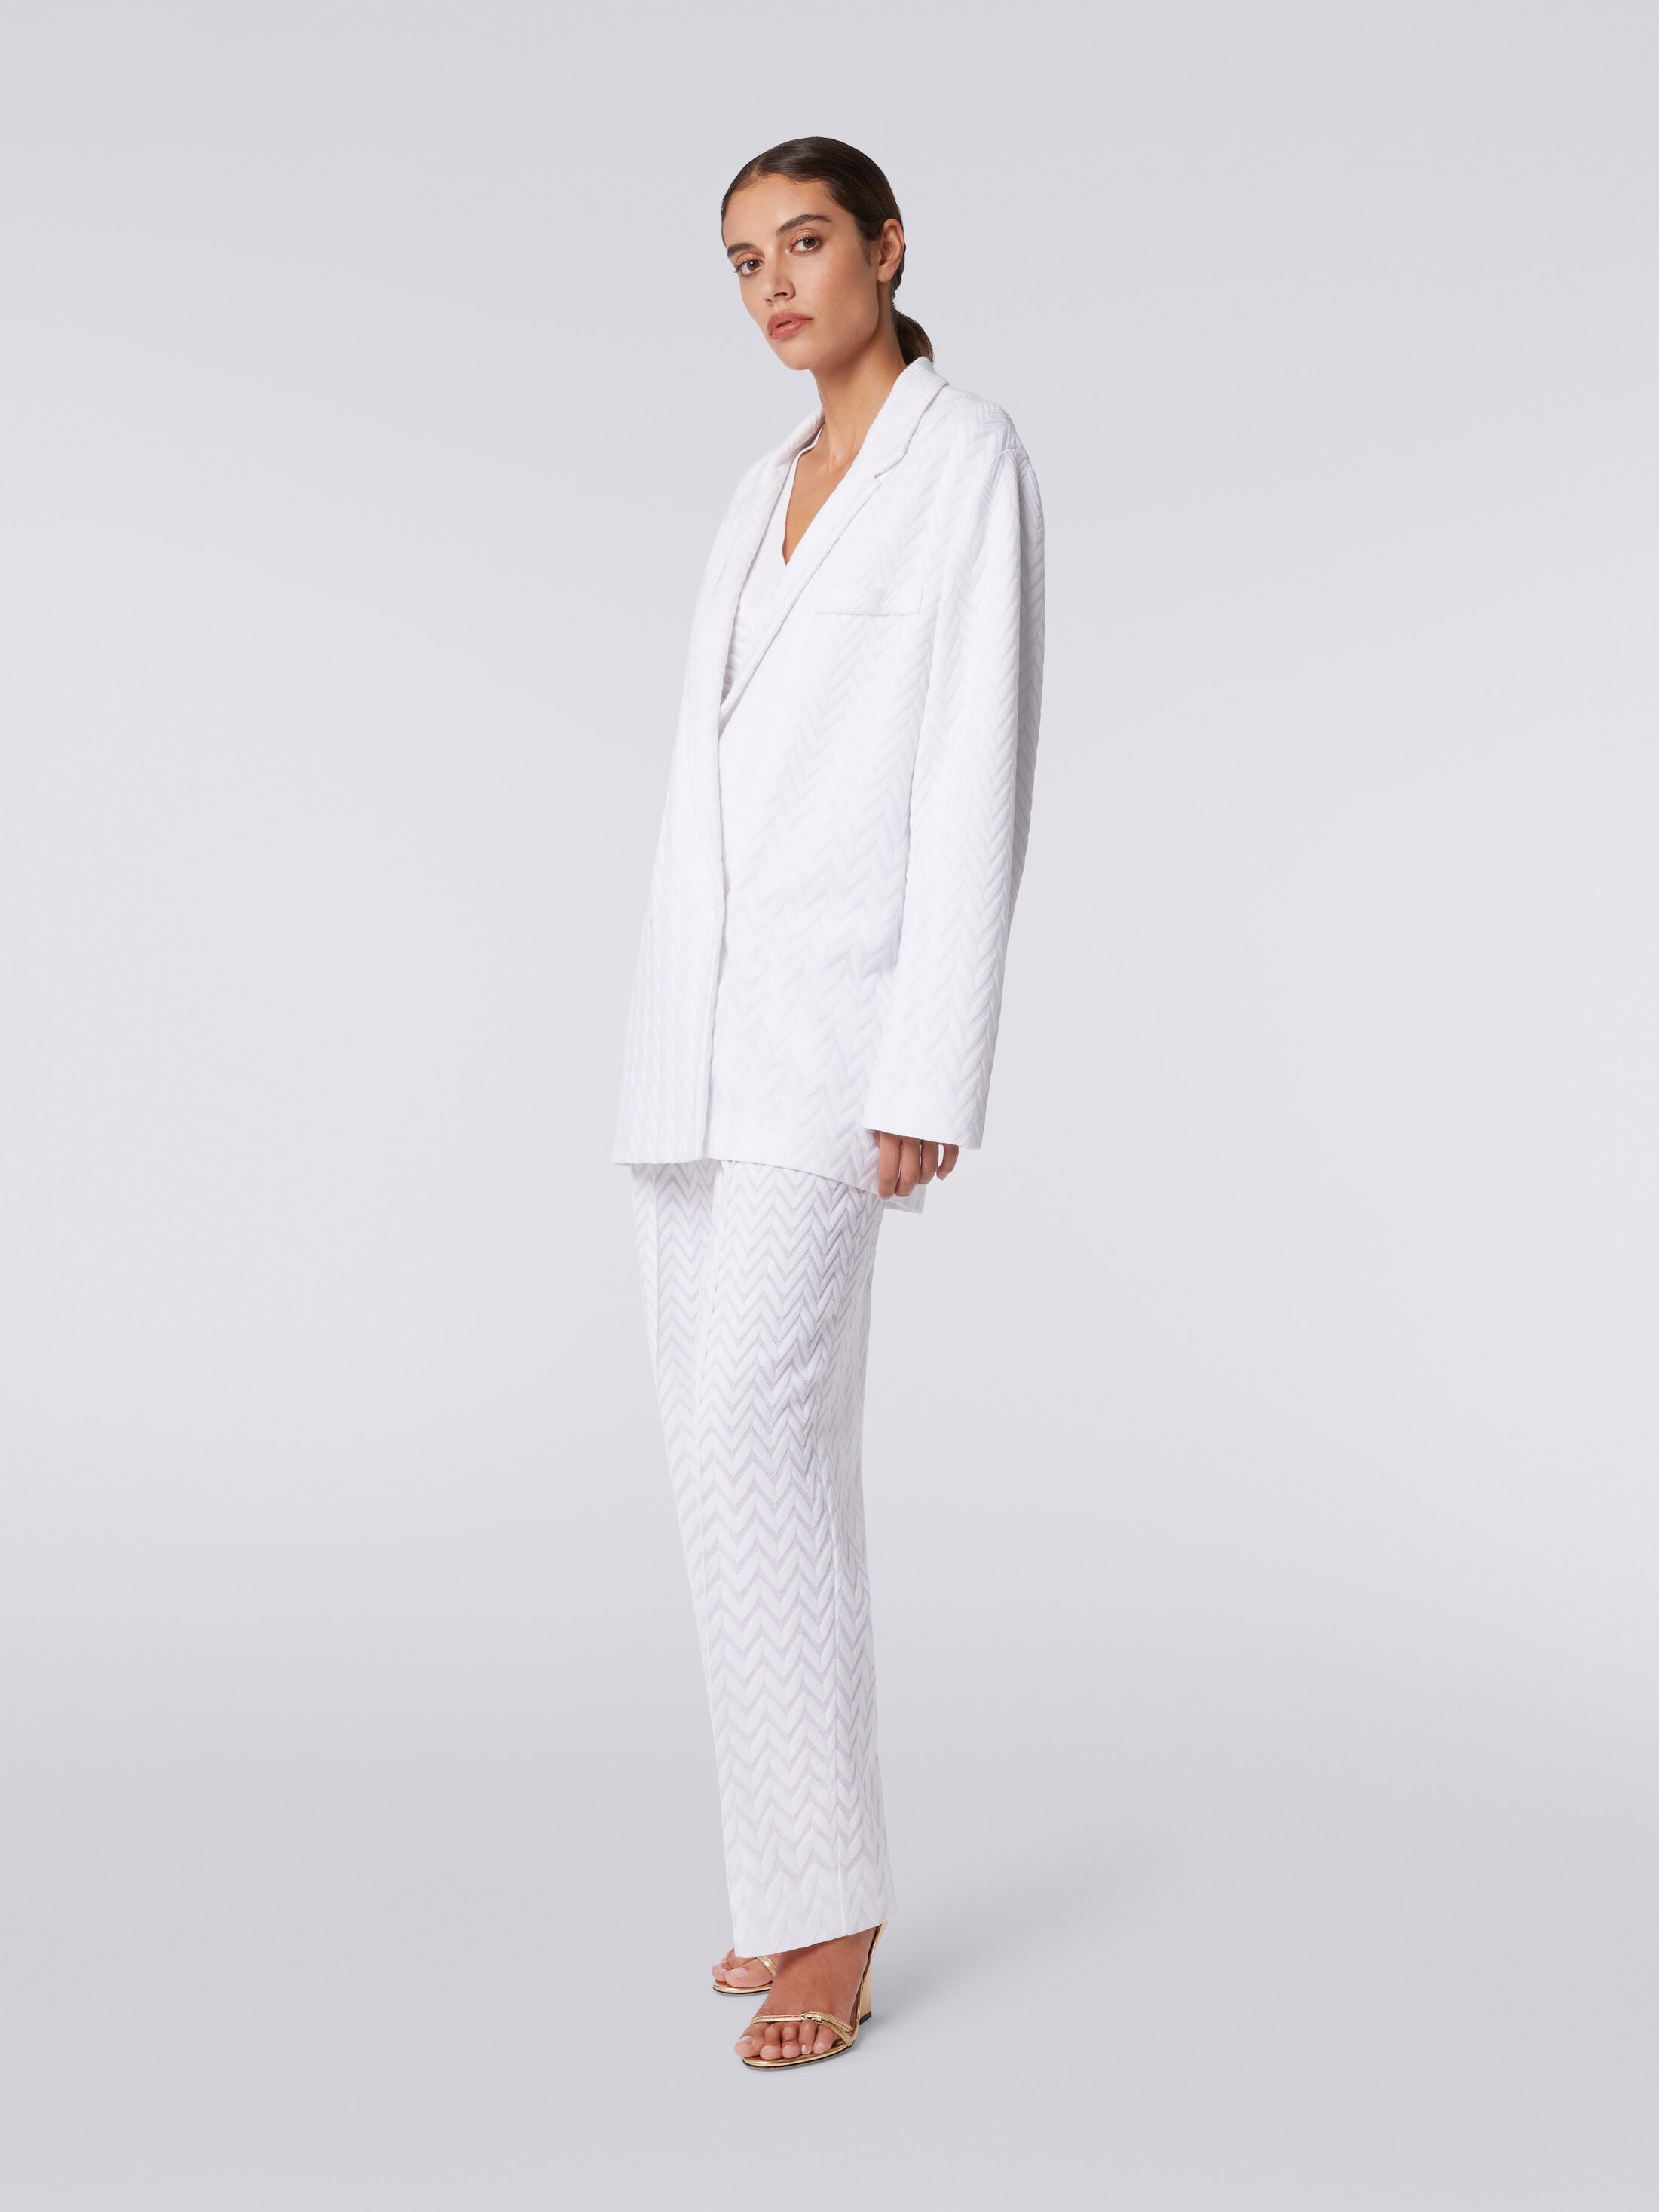 intermix-olive-silk-joggers-white-blazer-cropped-sweater-business-casual4 -  MEMORANDUM